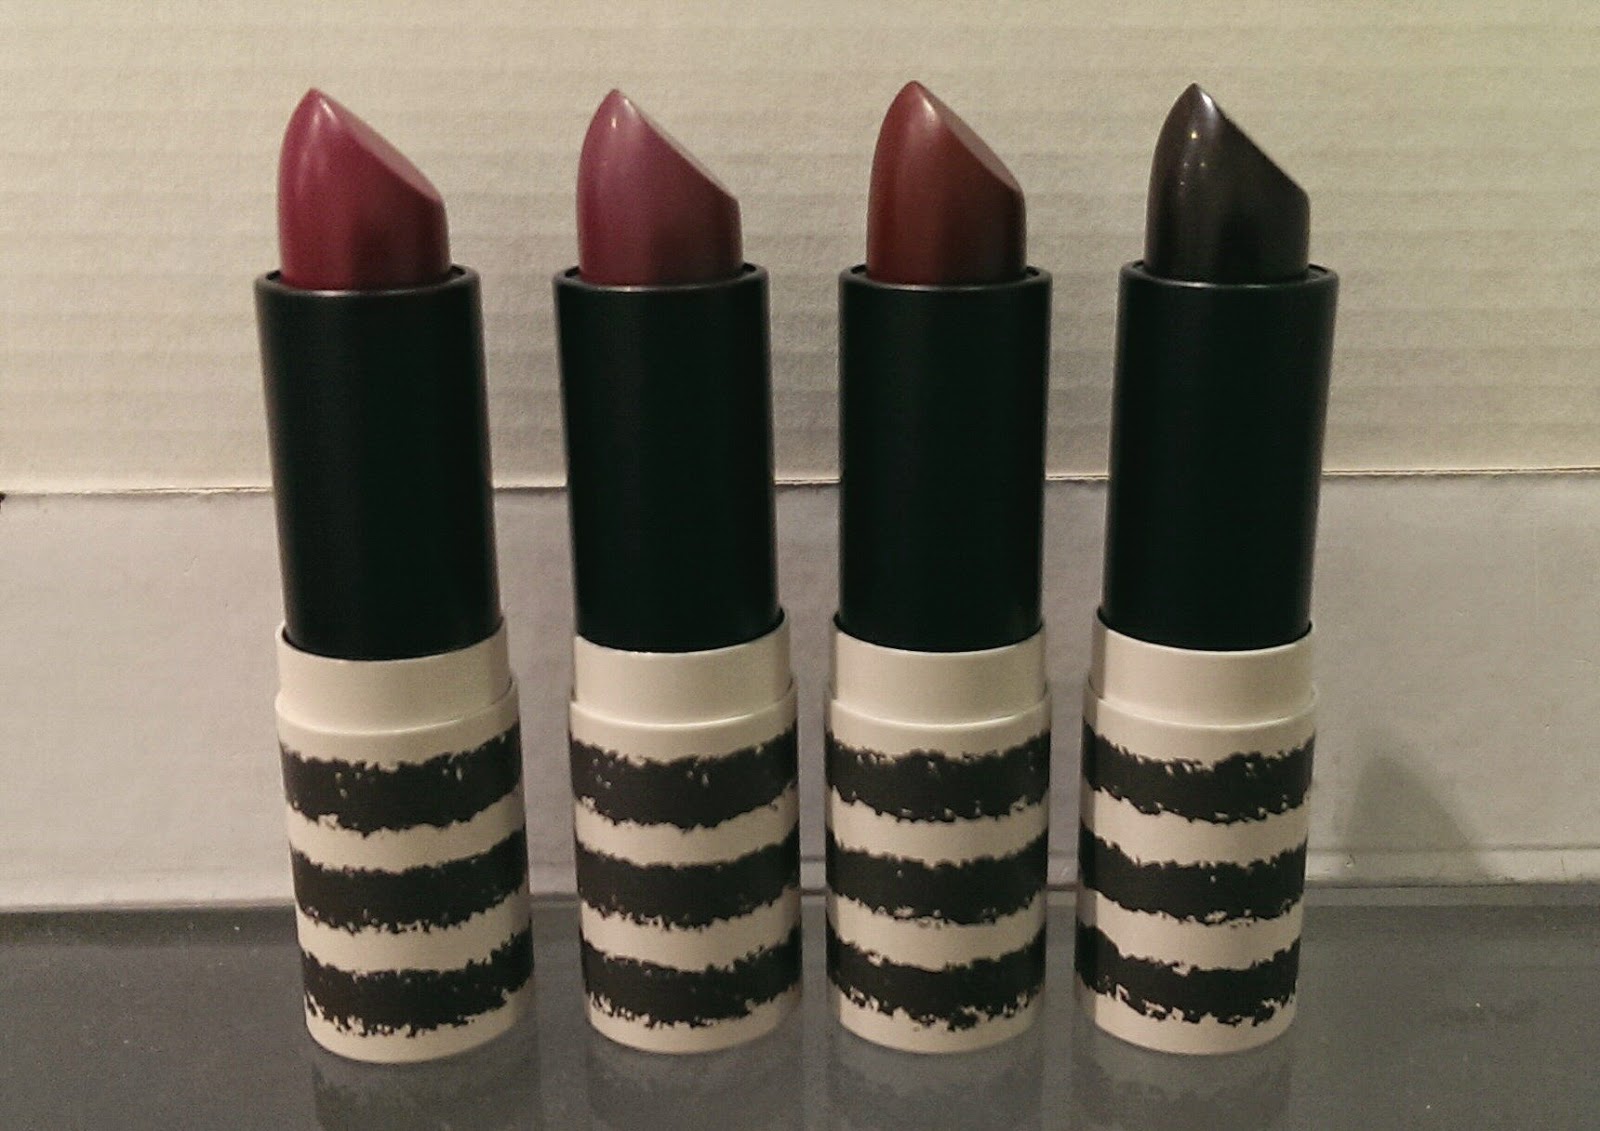 Topshop lipsticks full collection swatches | JadeBradyMakeup